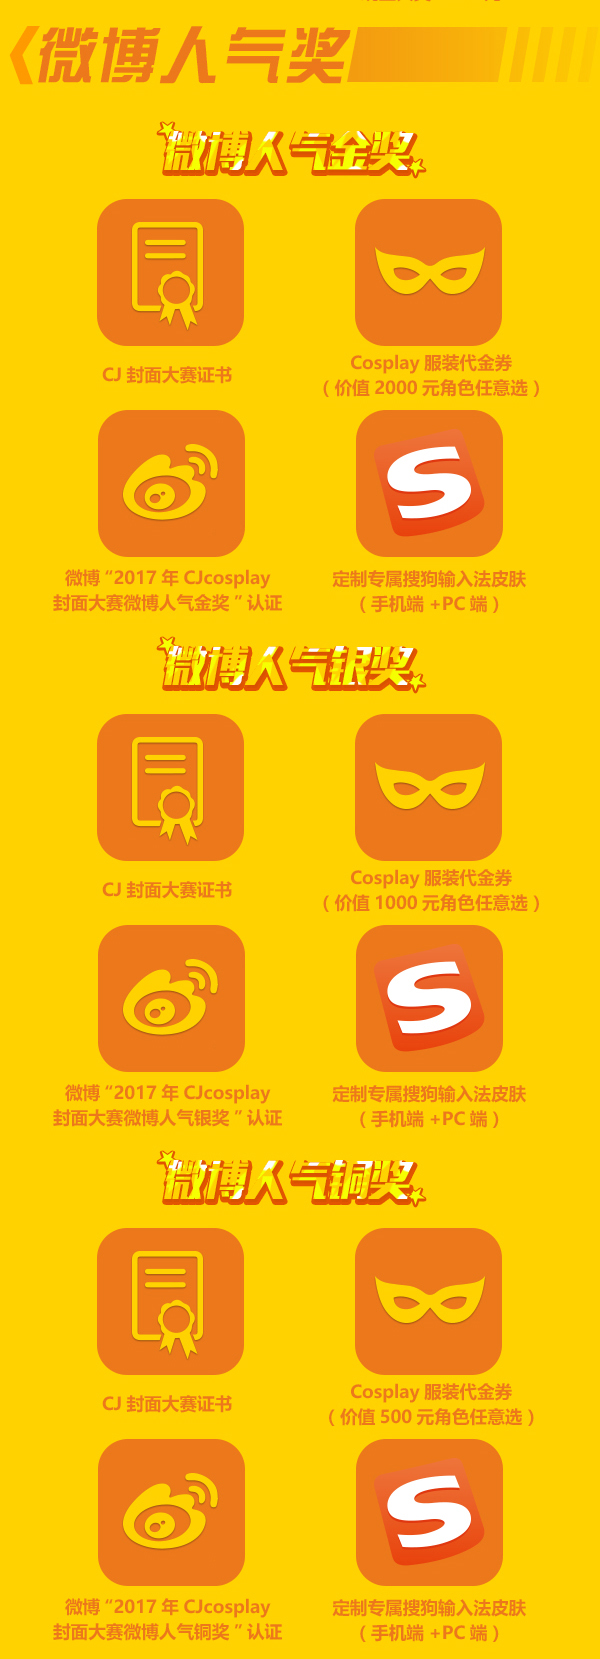 2017ChinaJoy Cosplay封面大赛豪华奖品公布![多图]图片6